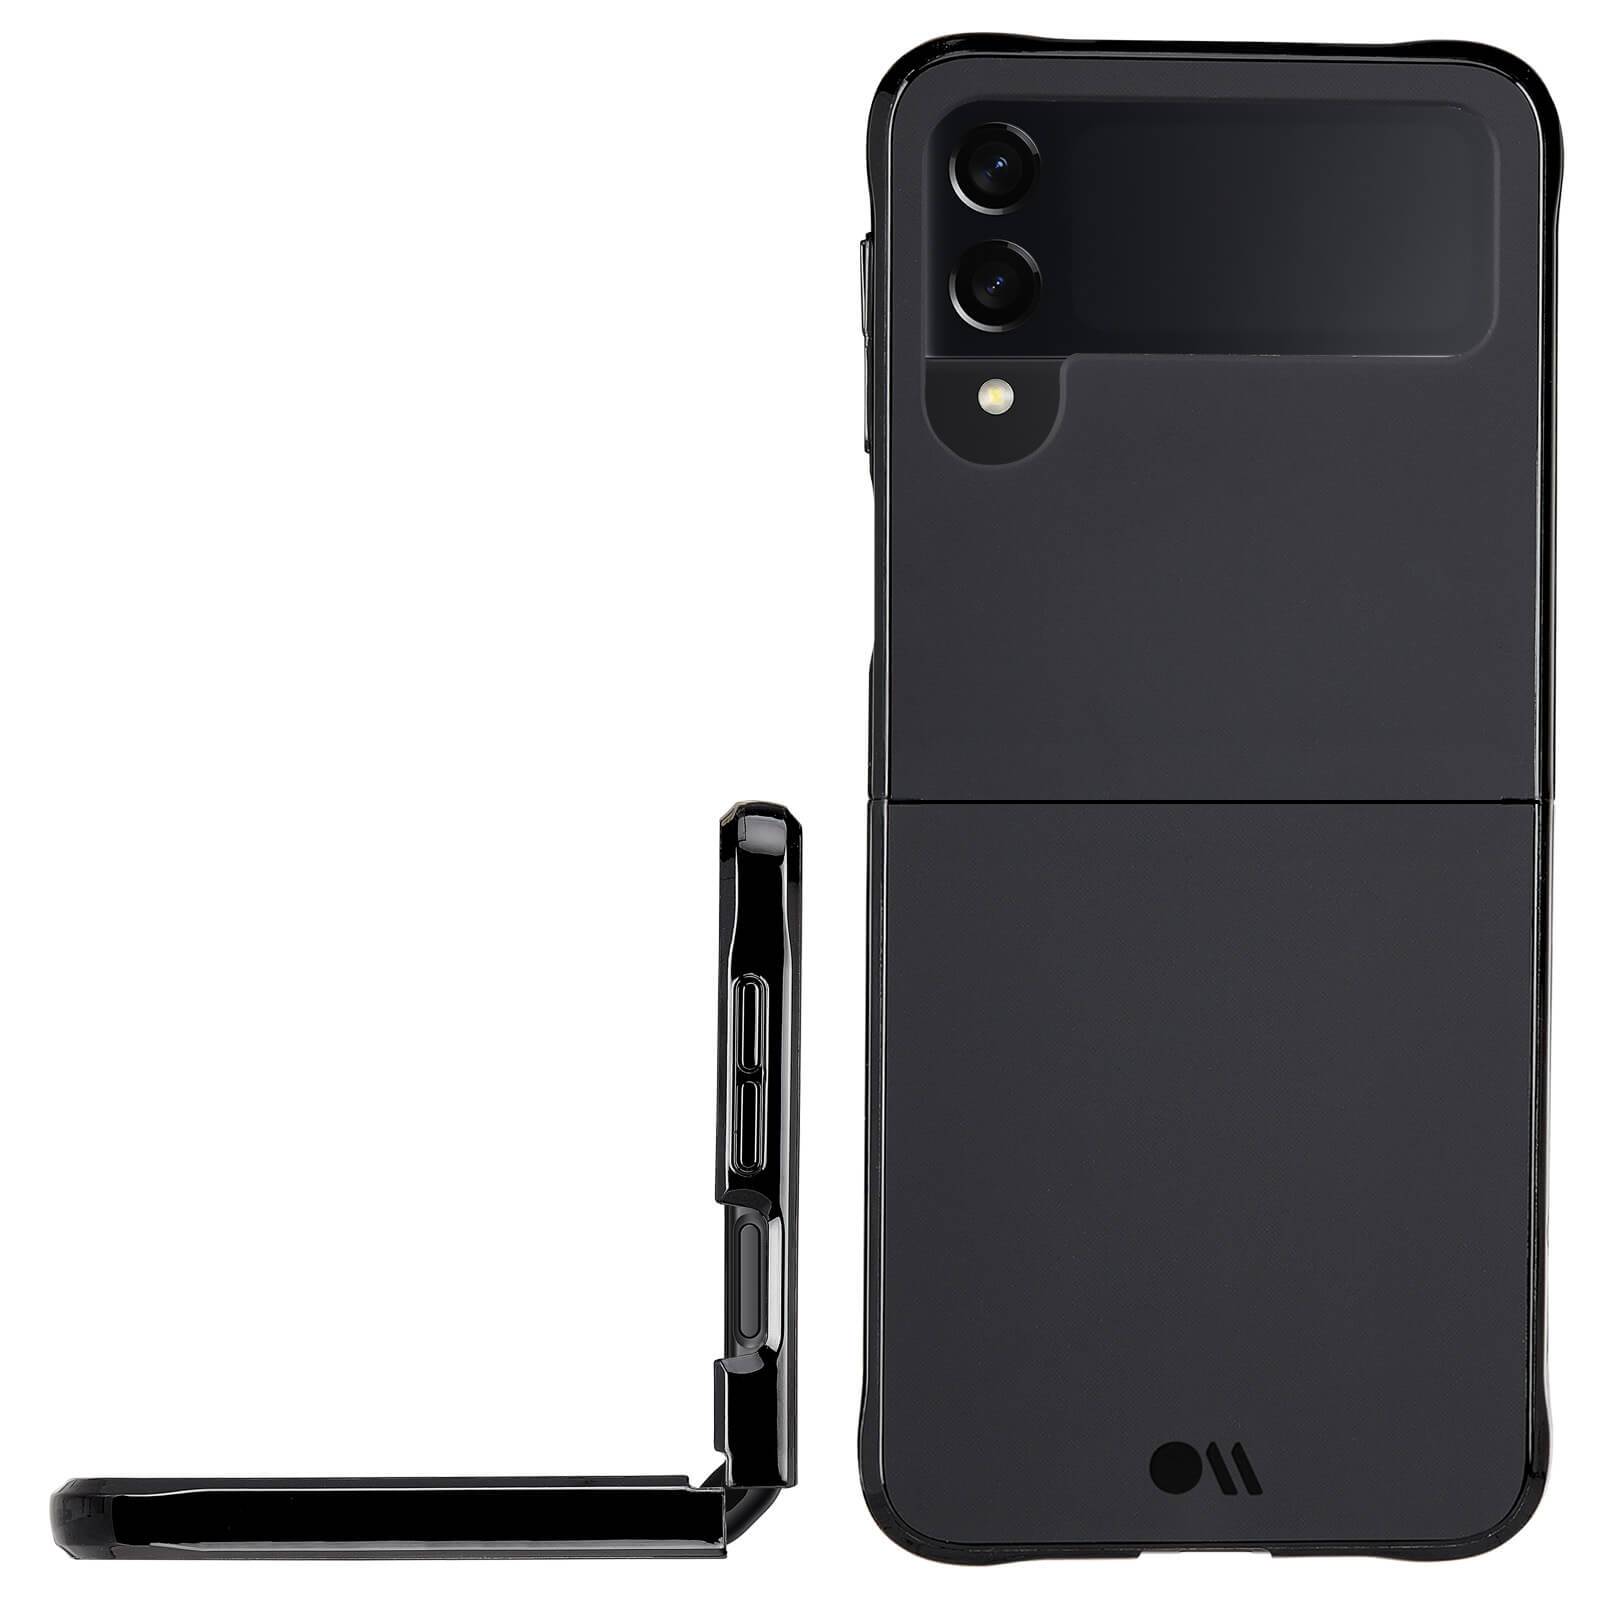 Flip tough black case shown from back and side on black device. color::Black